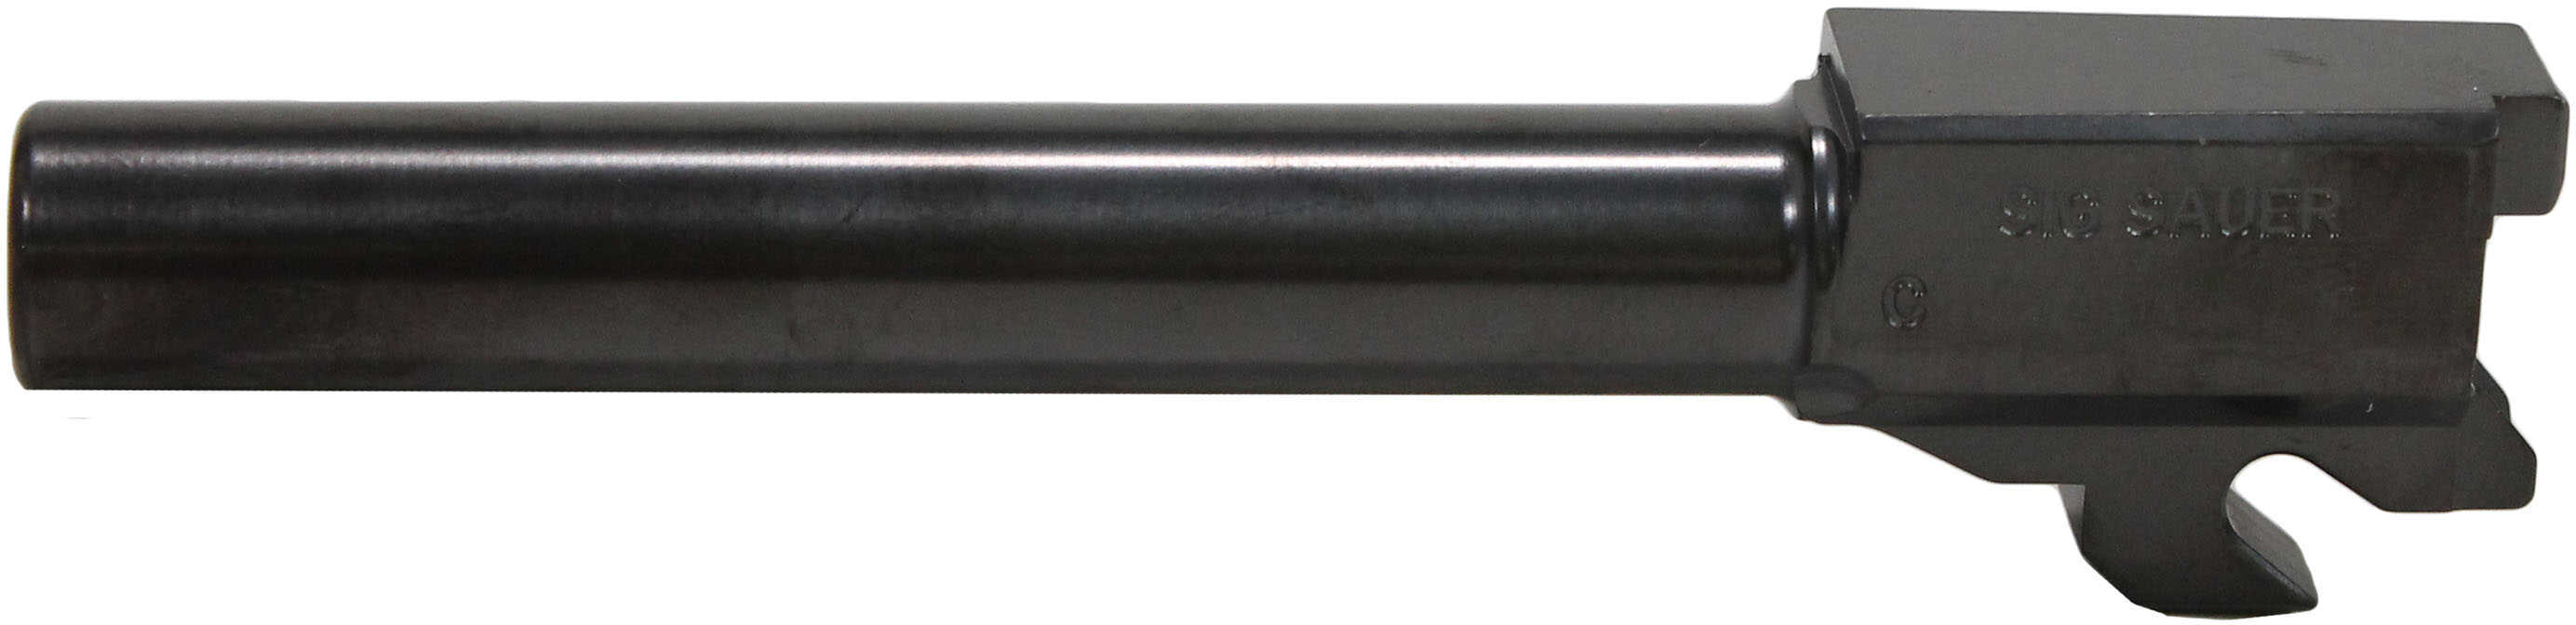 SigTac Replacement Barrel P320 9mm Full Size W/LCIMd: BBL-MOD-F-9-img-1